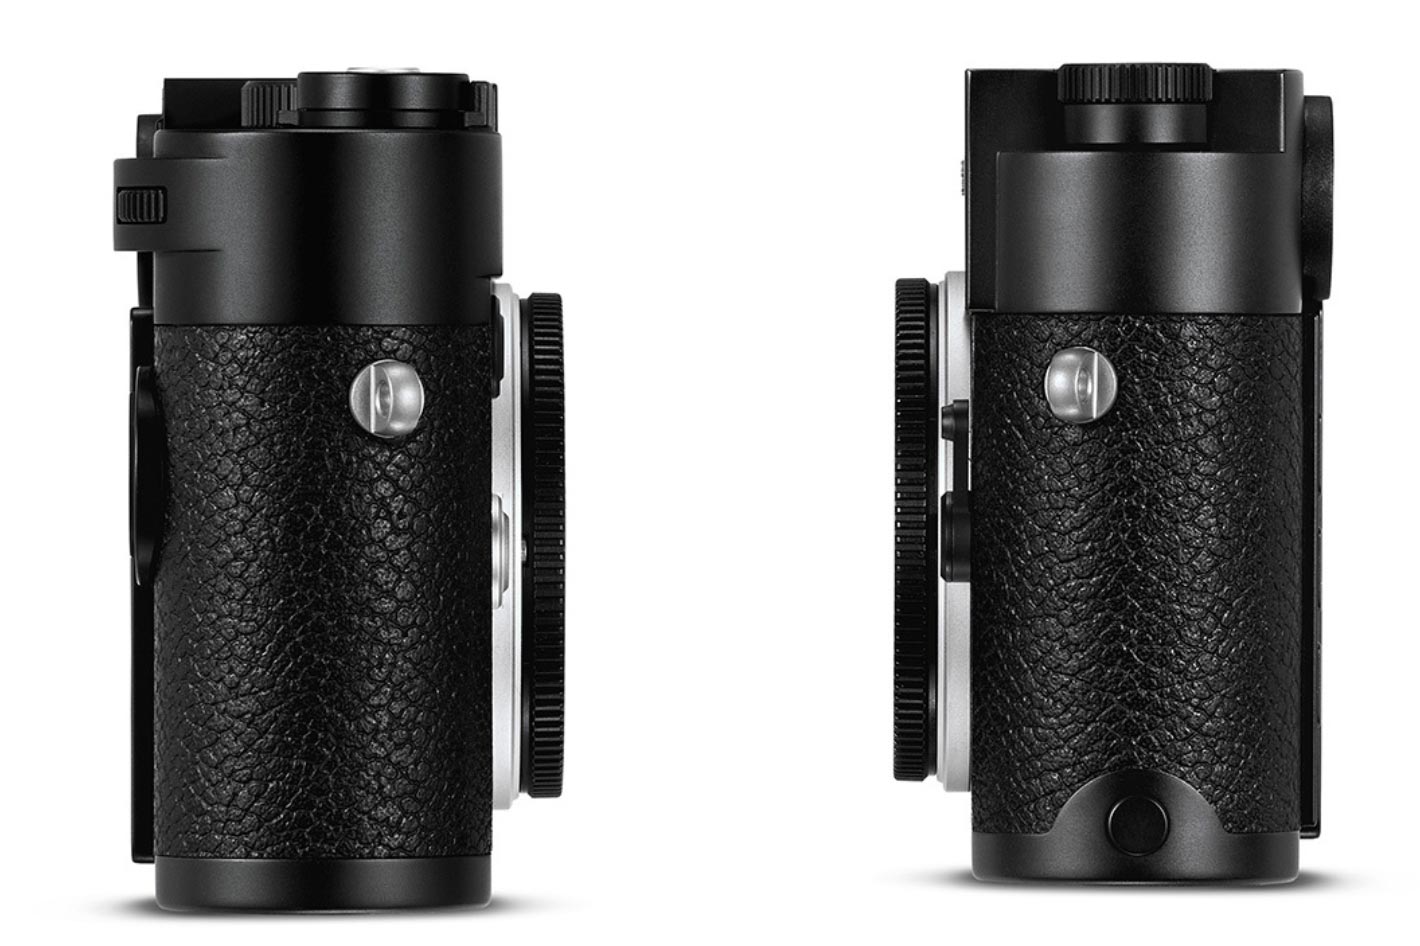 Leica M10-R: a 40-megapixel variant of a legendary camera